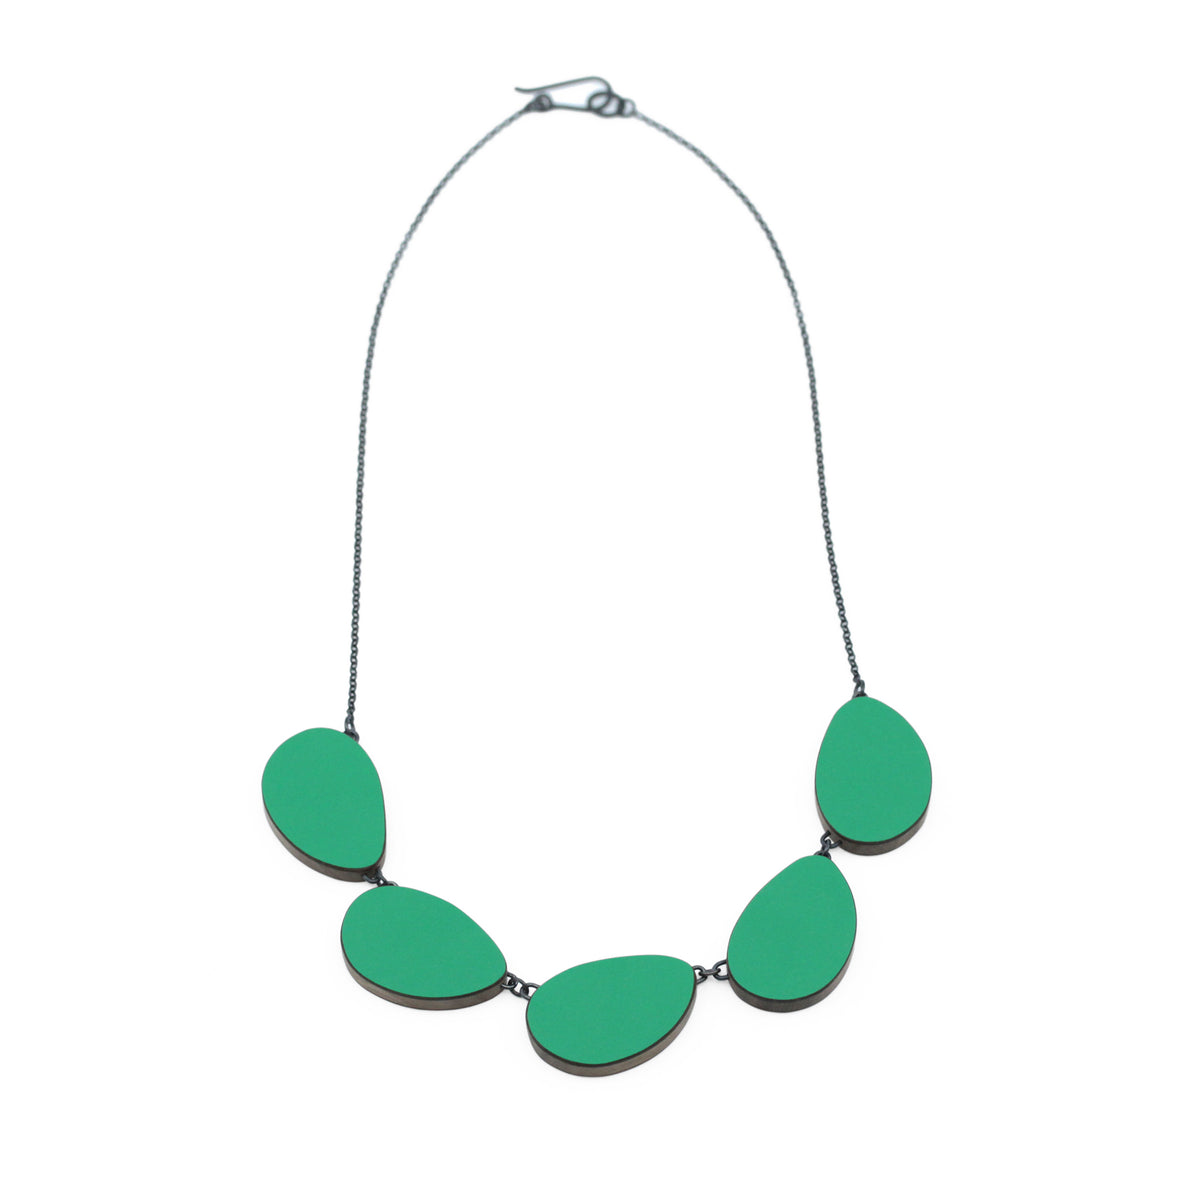 Five part curve necklace (reversible) - grass green and cobalt blue